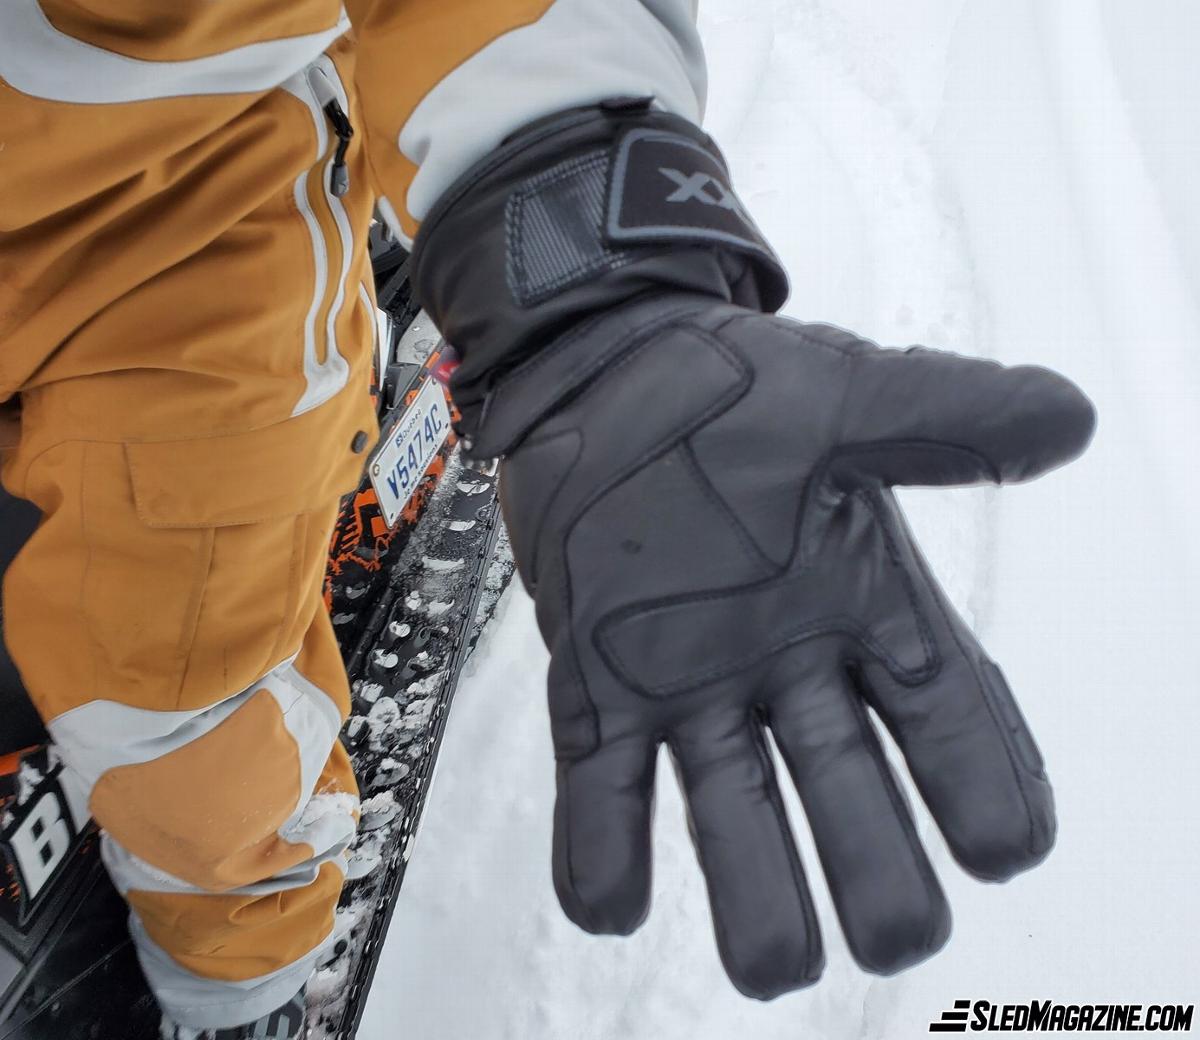 CKX Alaska Gloves - Our test - snowmobiles - snowmobilers